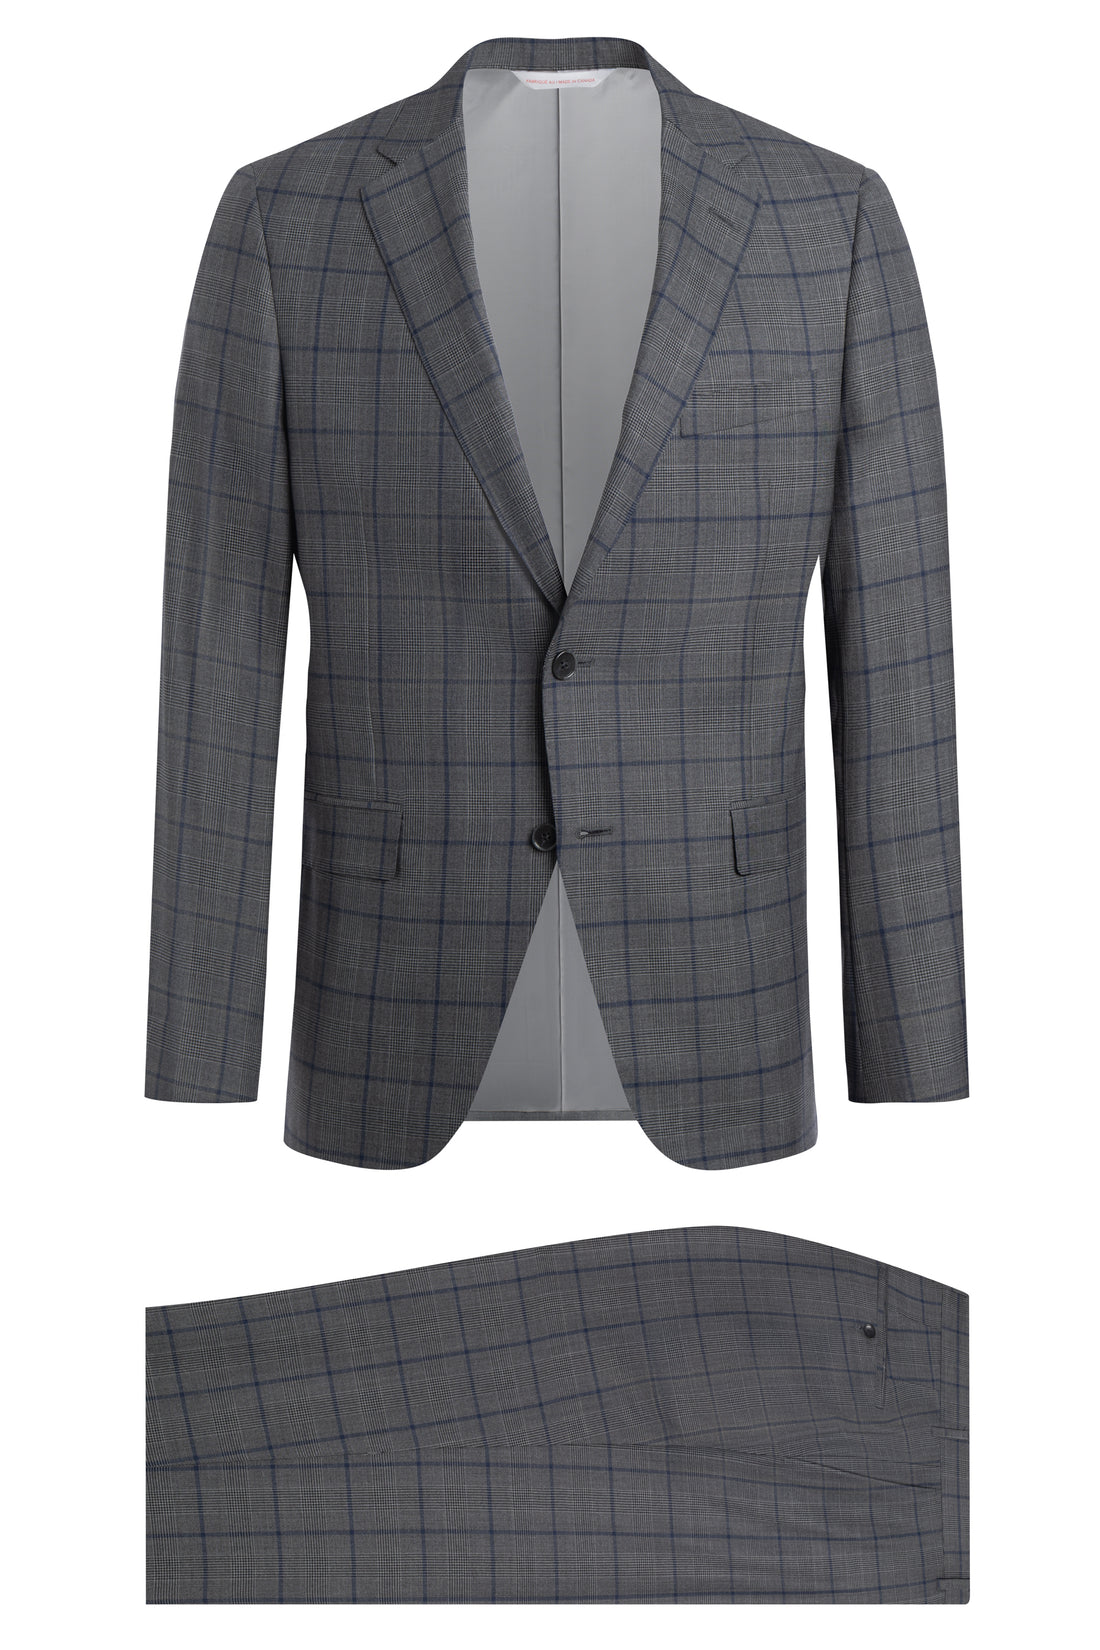 Smoke Grey 150’s Overcheck Suit